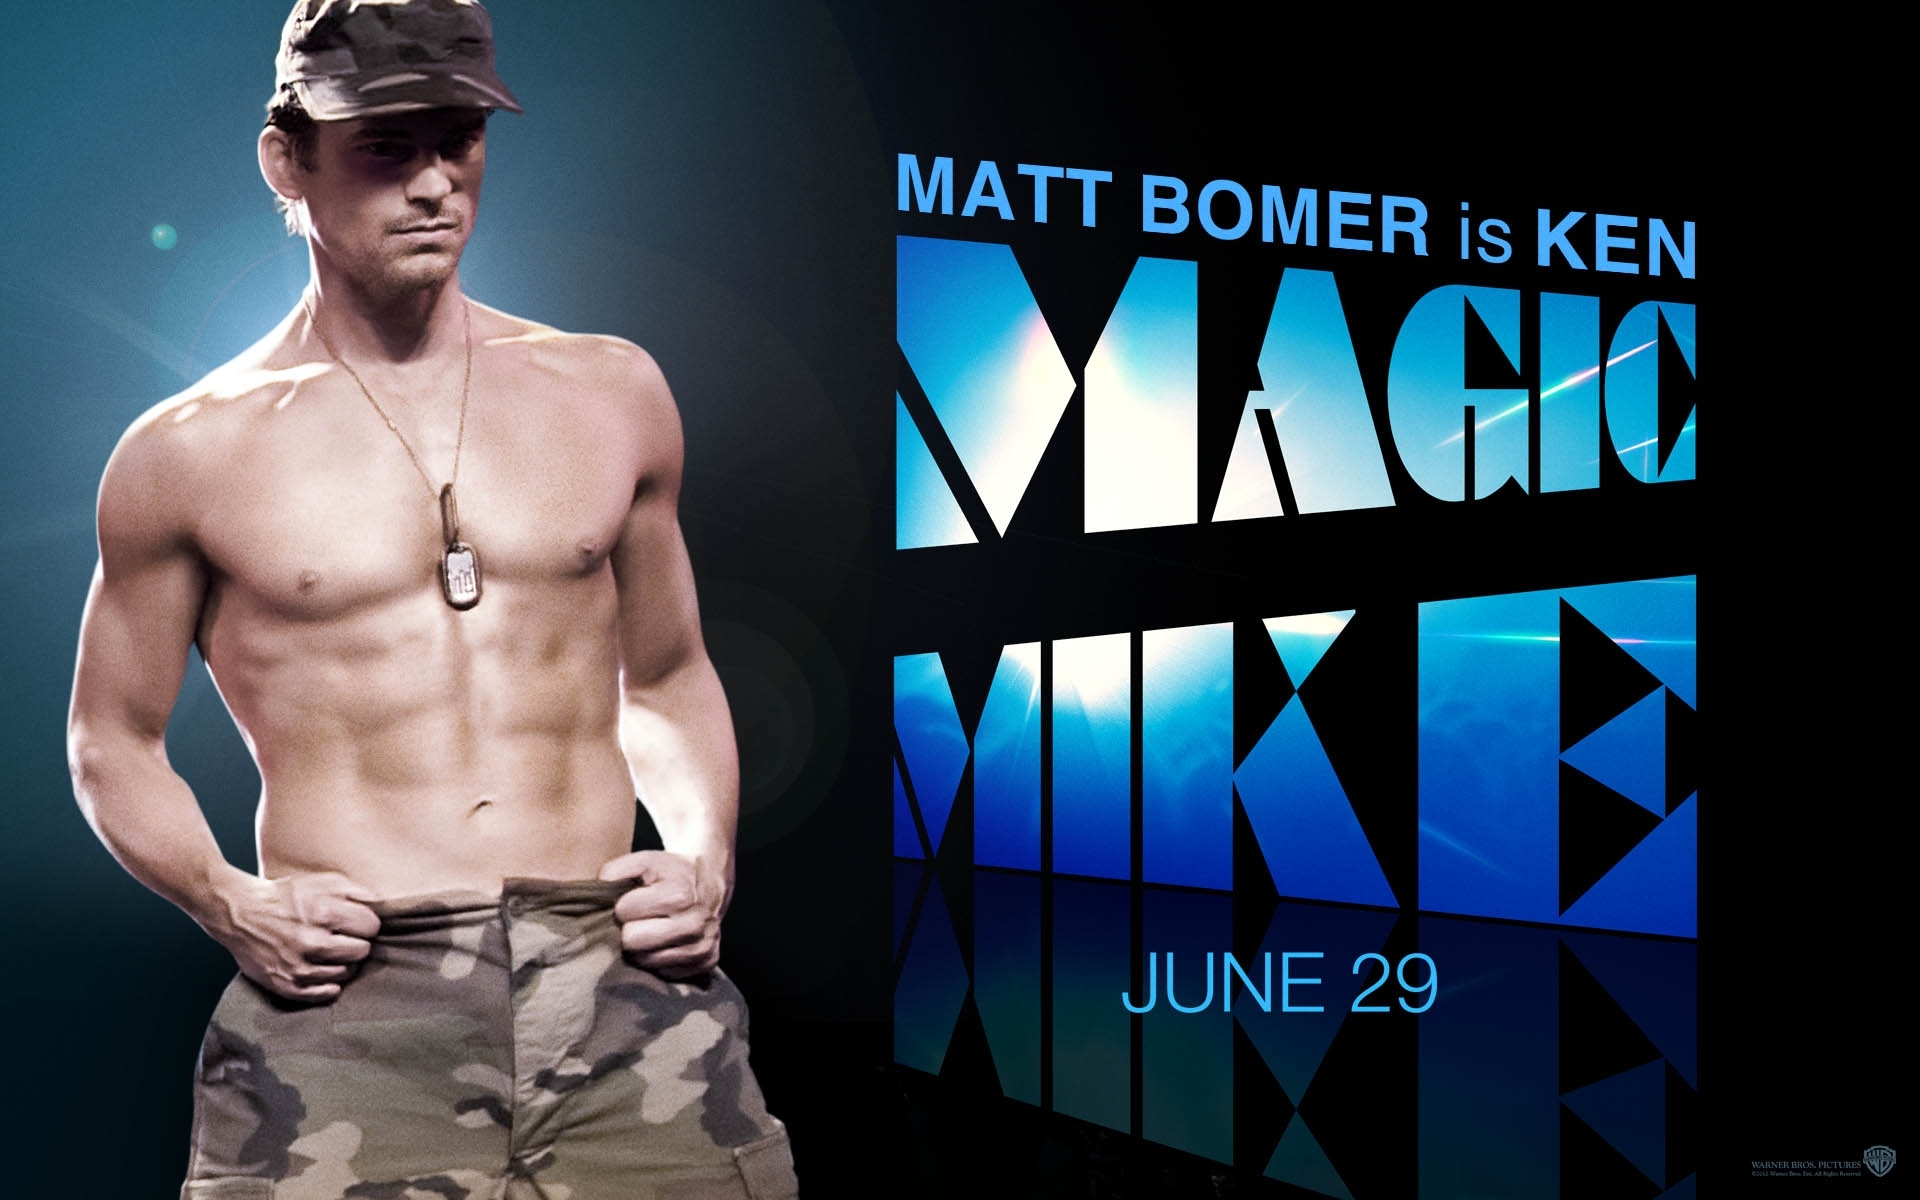 Magic Mike Matthew Bomer